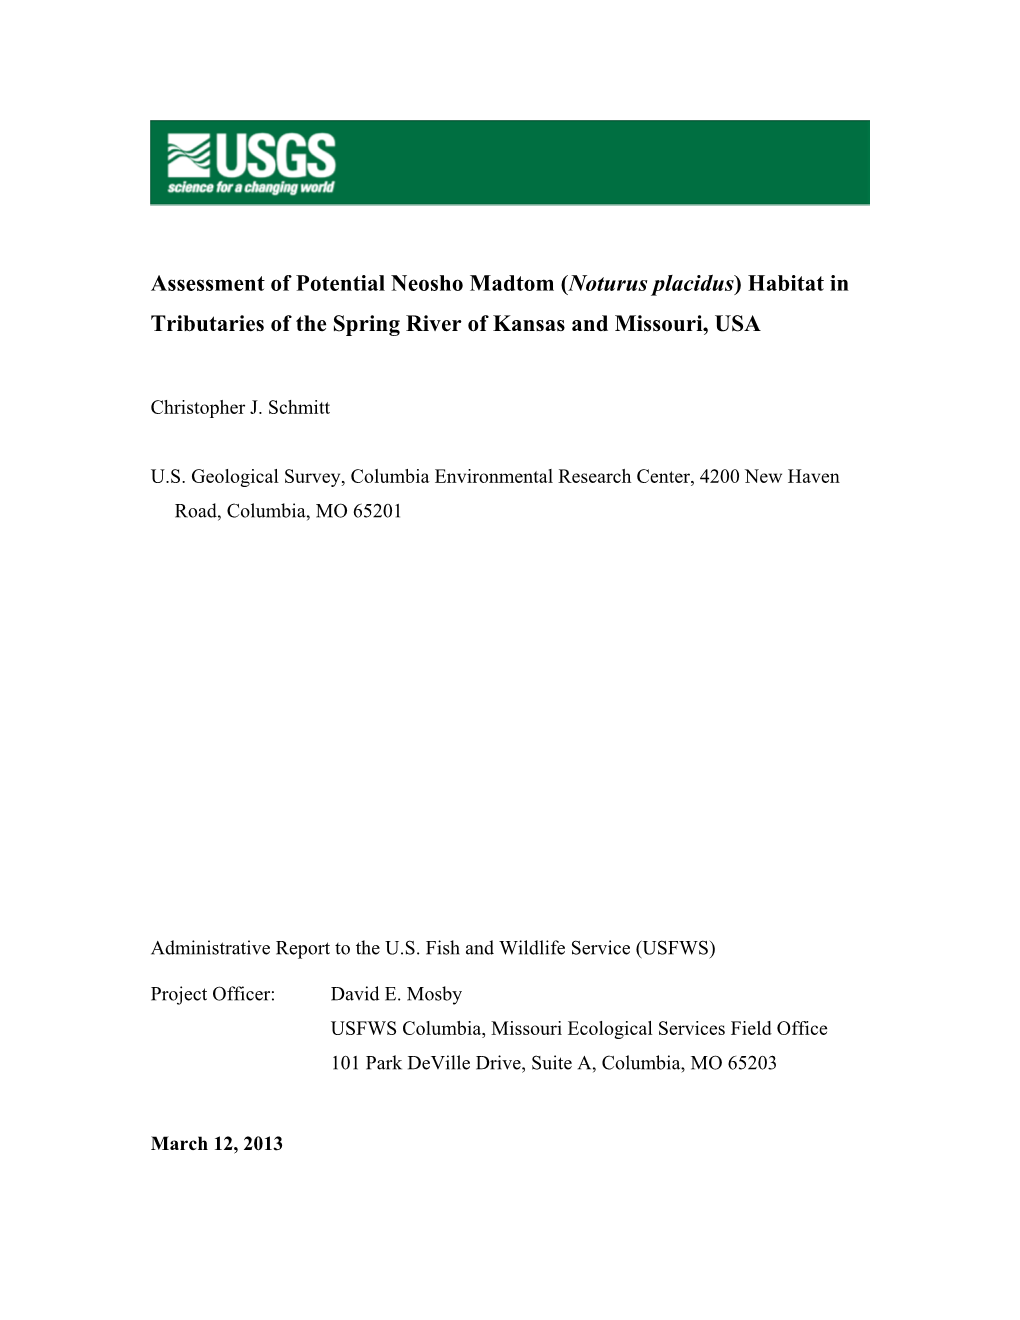 Assessment of Potential Neosho Madtom (Noturus Placidus) Habitat in Tributaries of the Spring River of Kansas and Missouri, USA